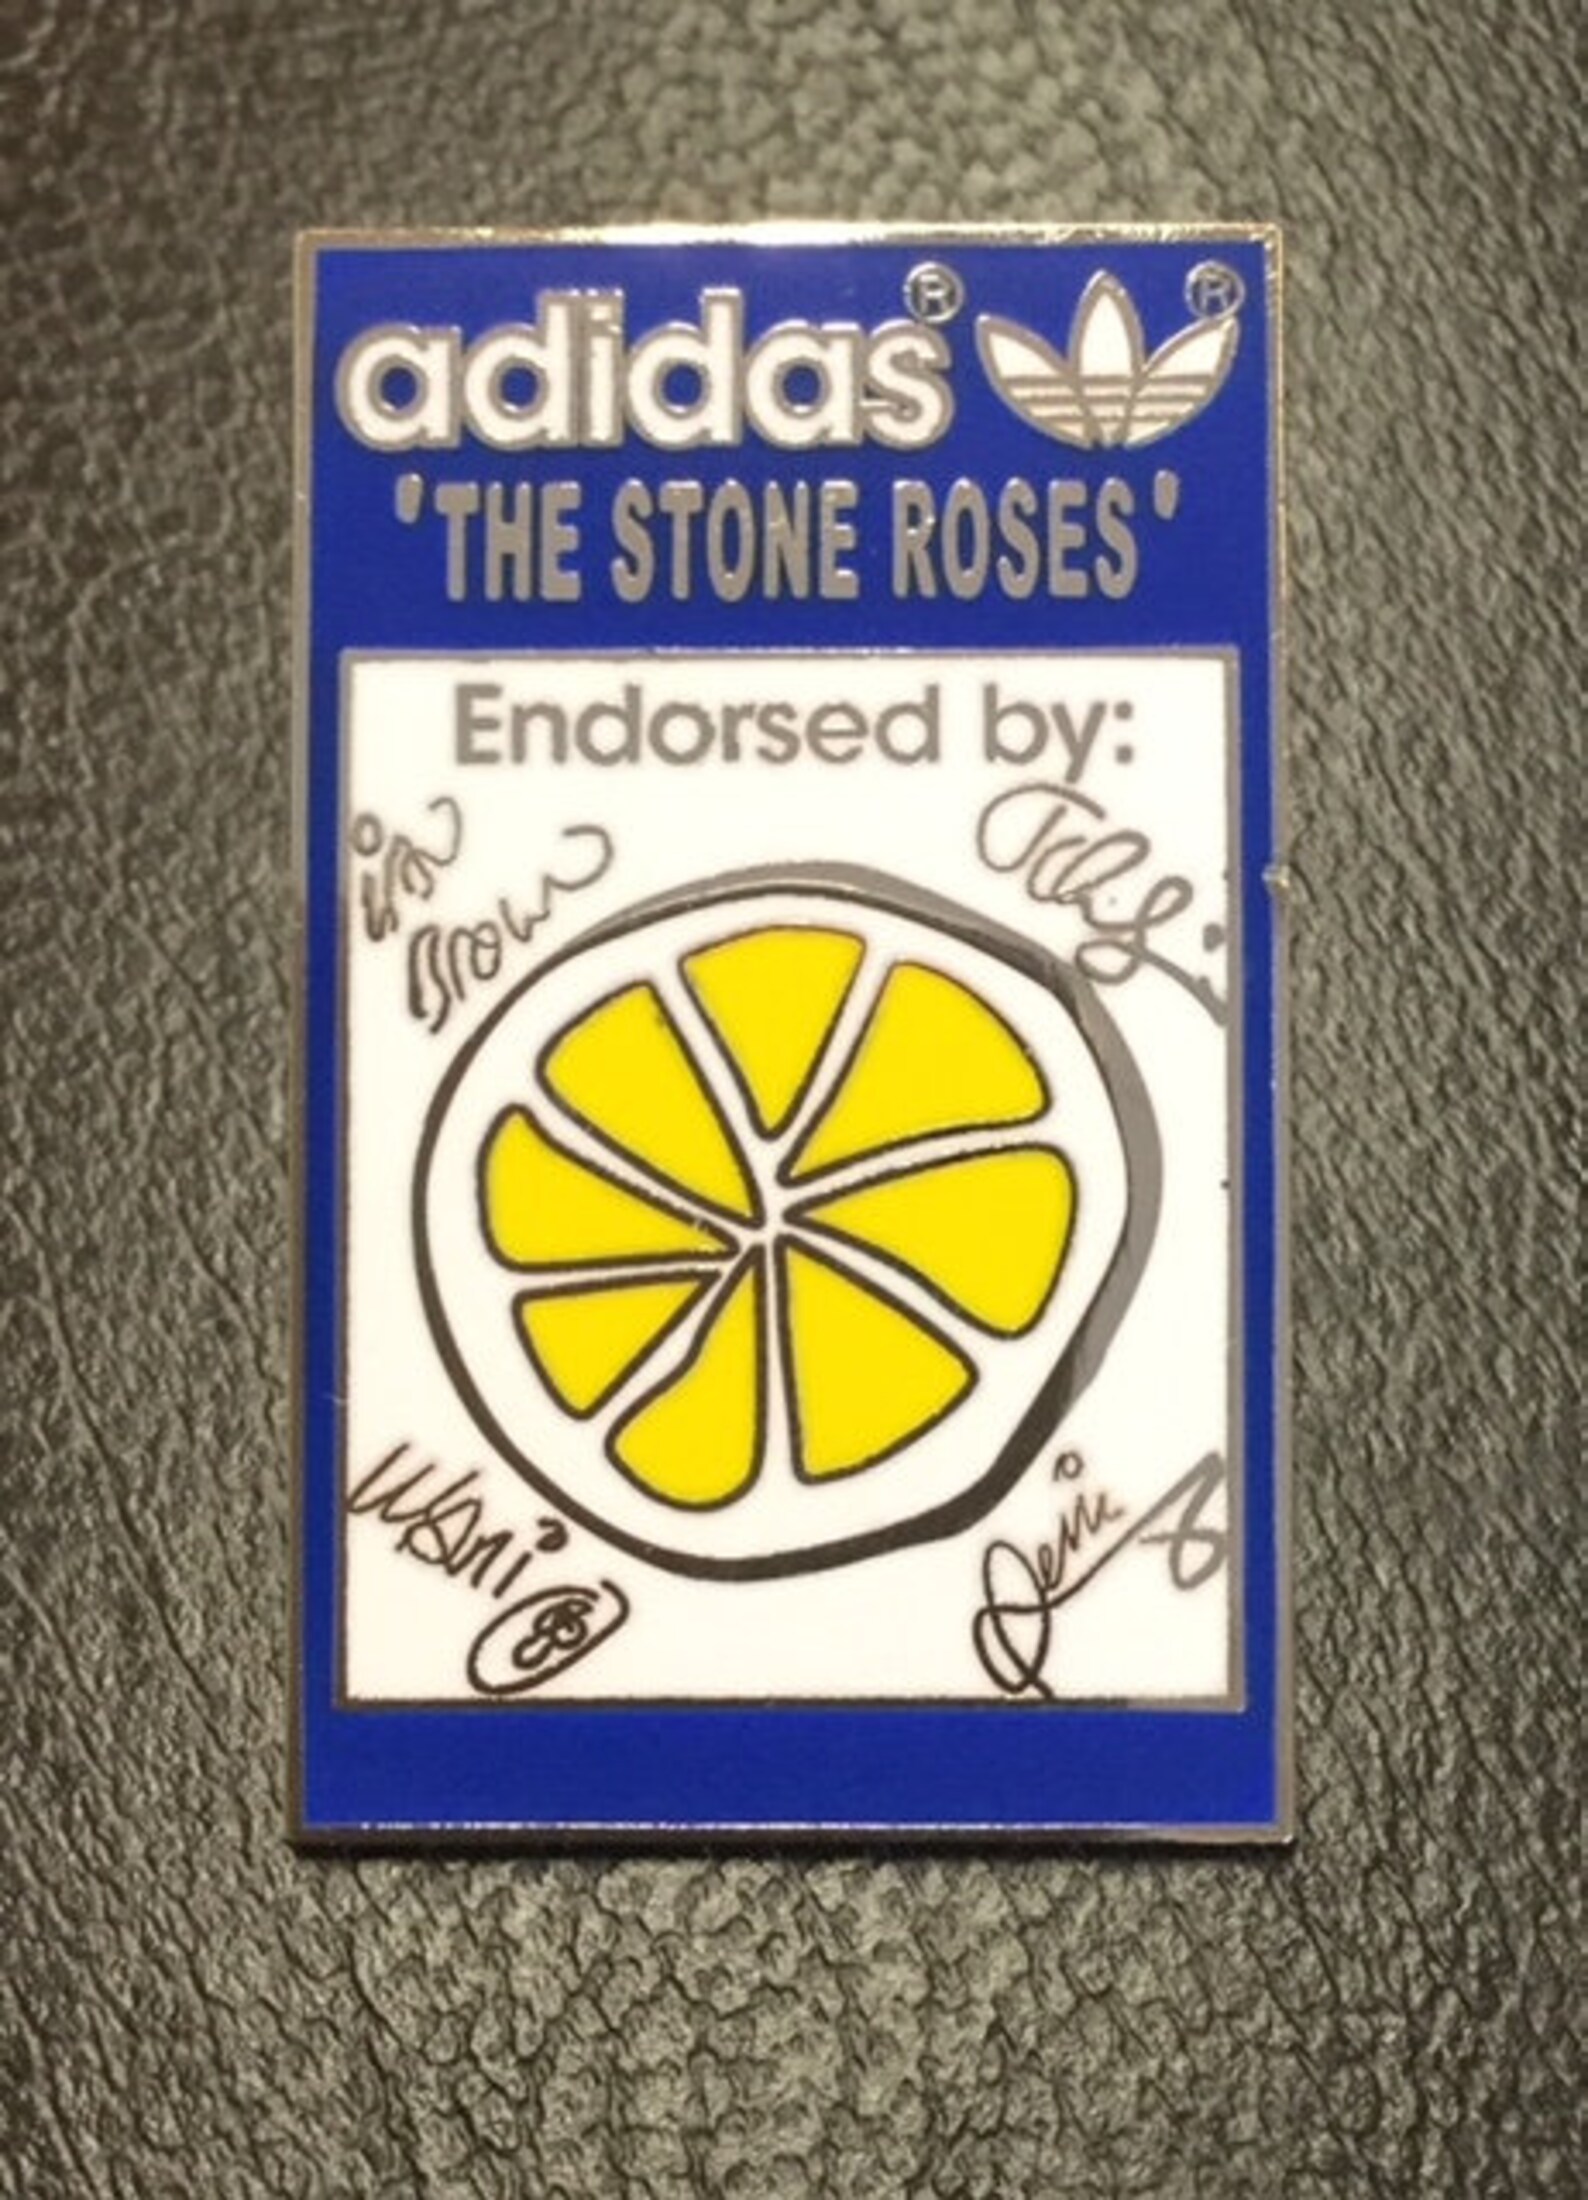 The STONE ROSES Adidas Endorsed Enamel Pin Badge Souvenir | Etsy